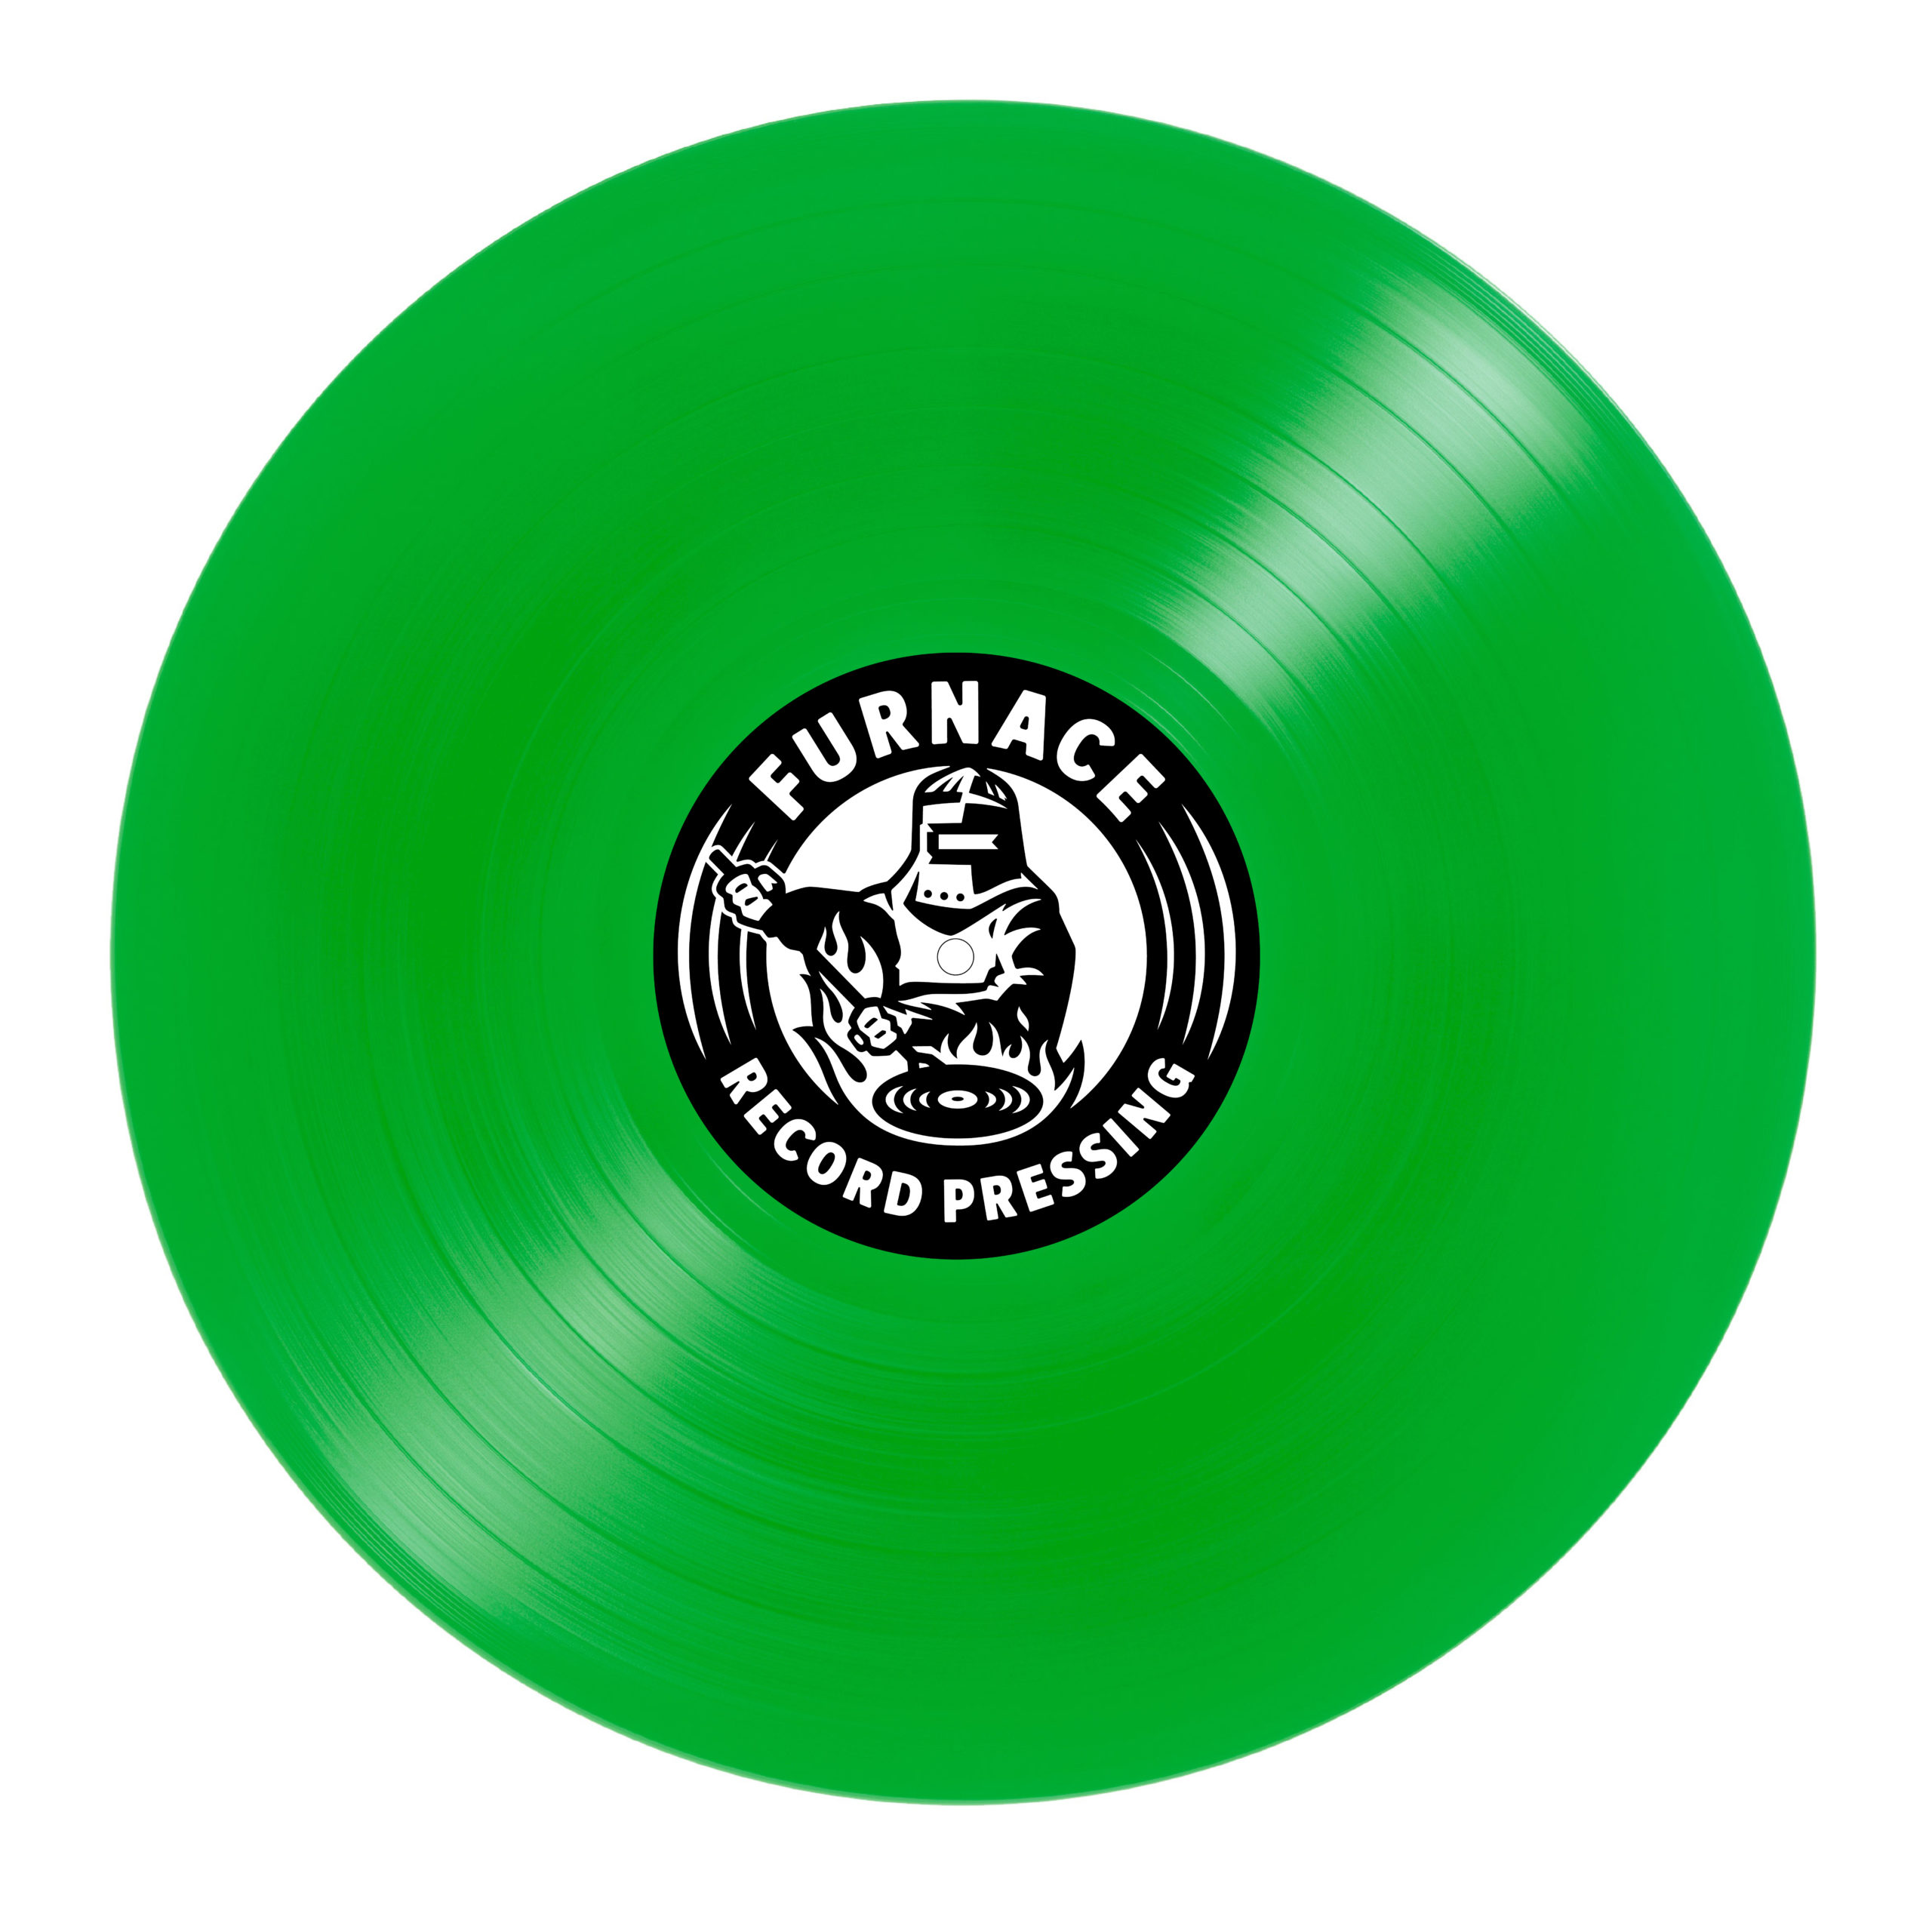 Green Vinyl Records - Find Colored Vinyl